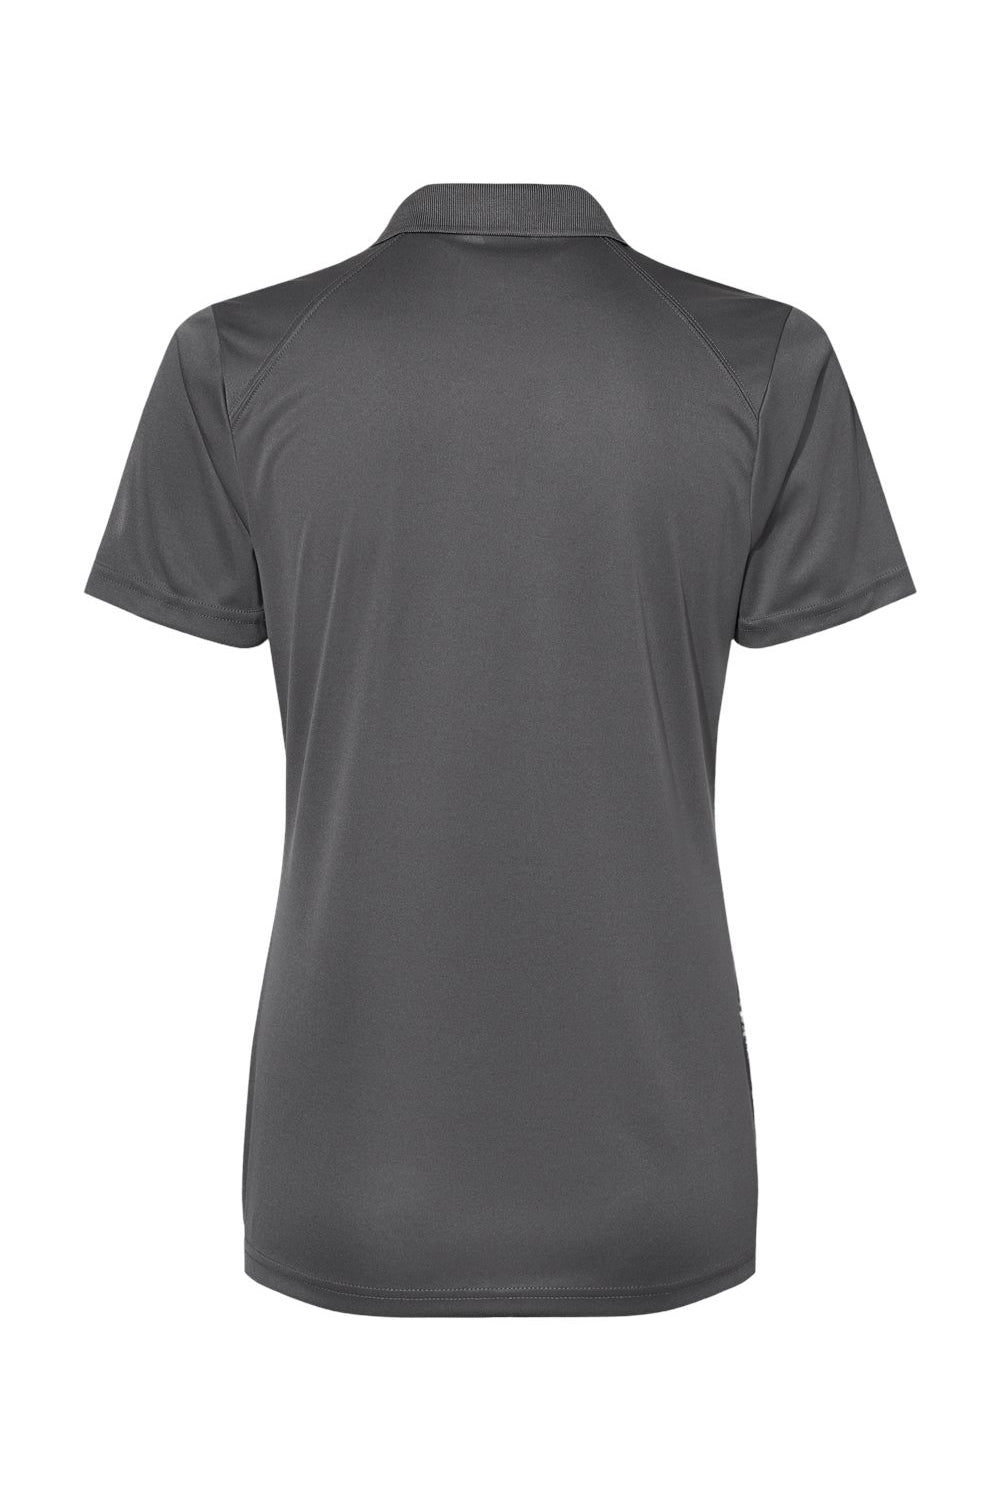 C2 Sport 5902 Womens Moisture Wicking Short Sleeve Polo Shirt Graphite Grey Flat Back